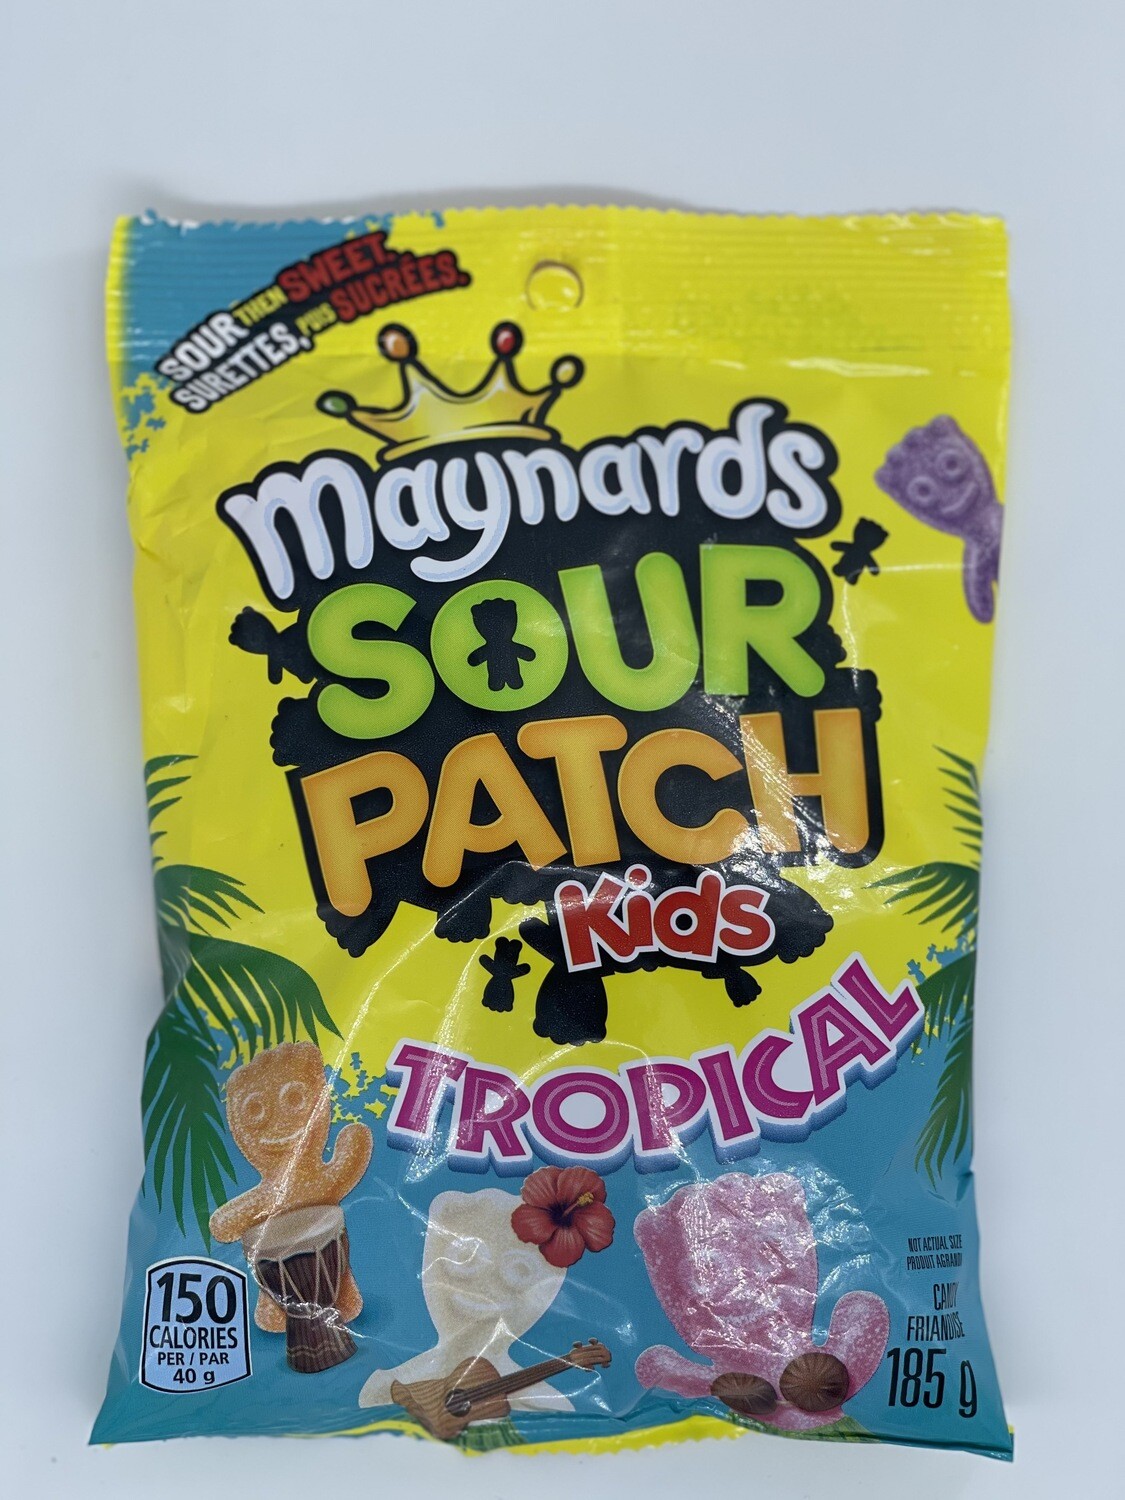 Maynards Sour Patch Kids Tropical